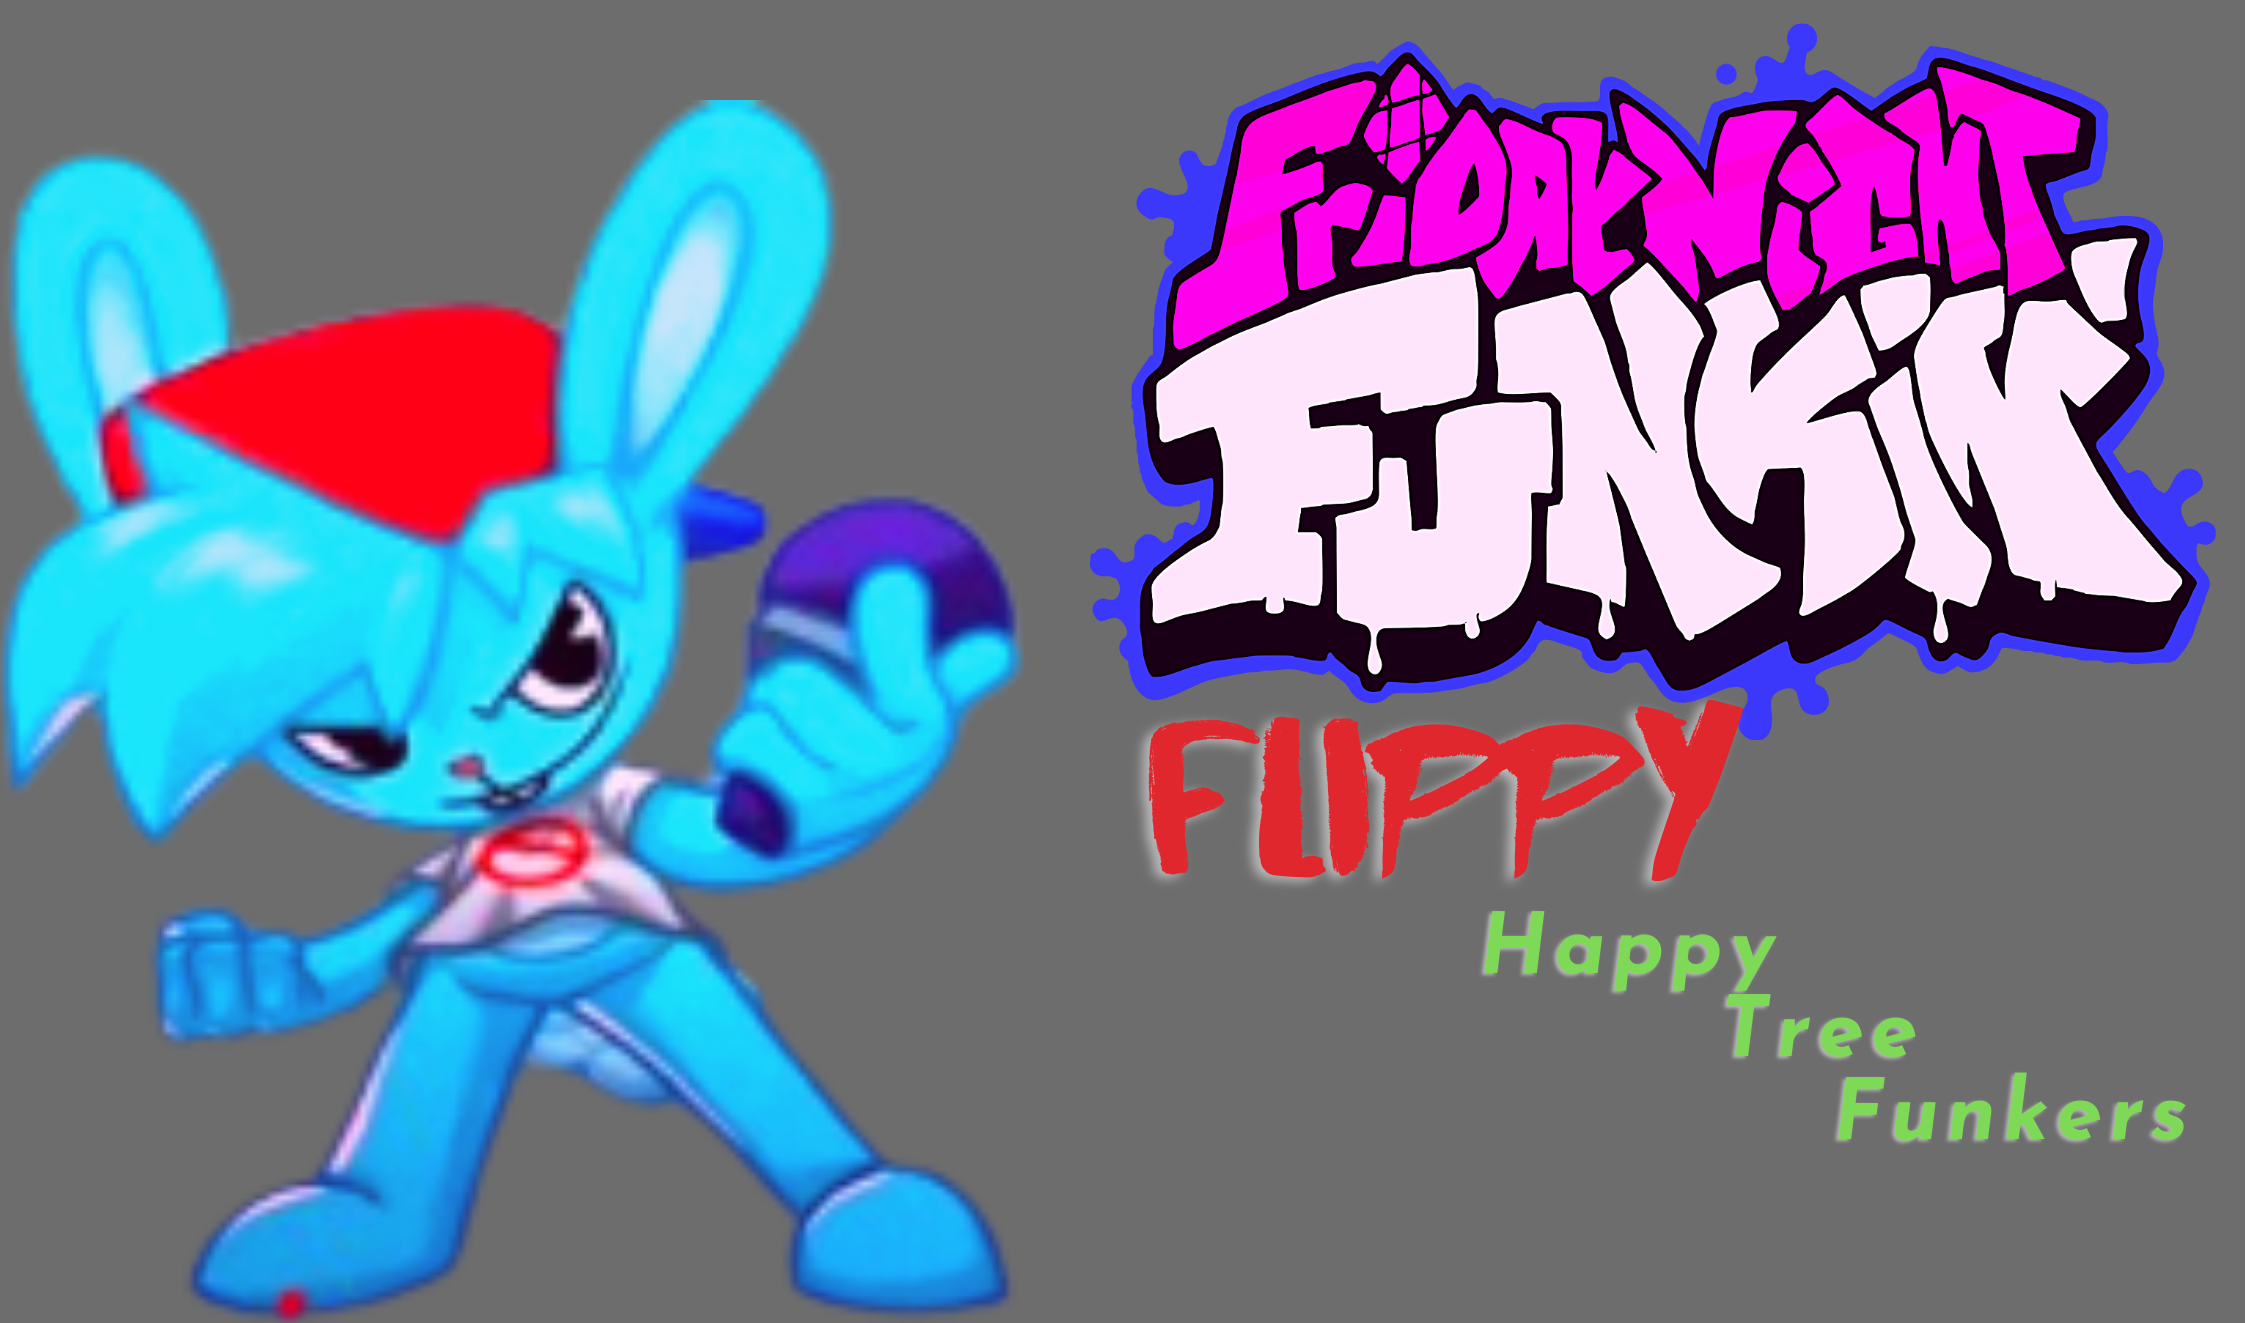 FNF: Sonic Vs Fleetway Chaos Nightmare 🔥 Play online